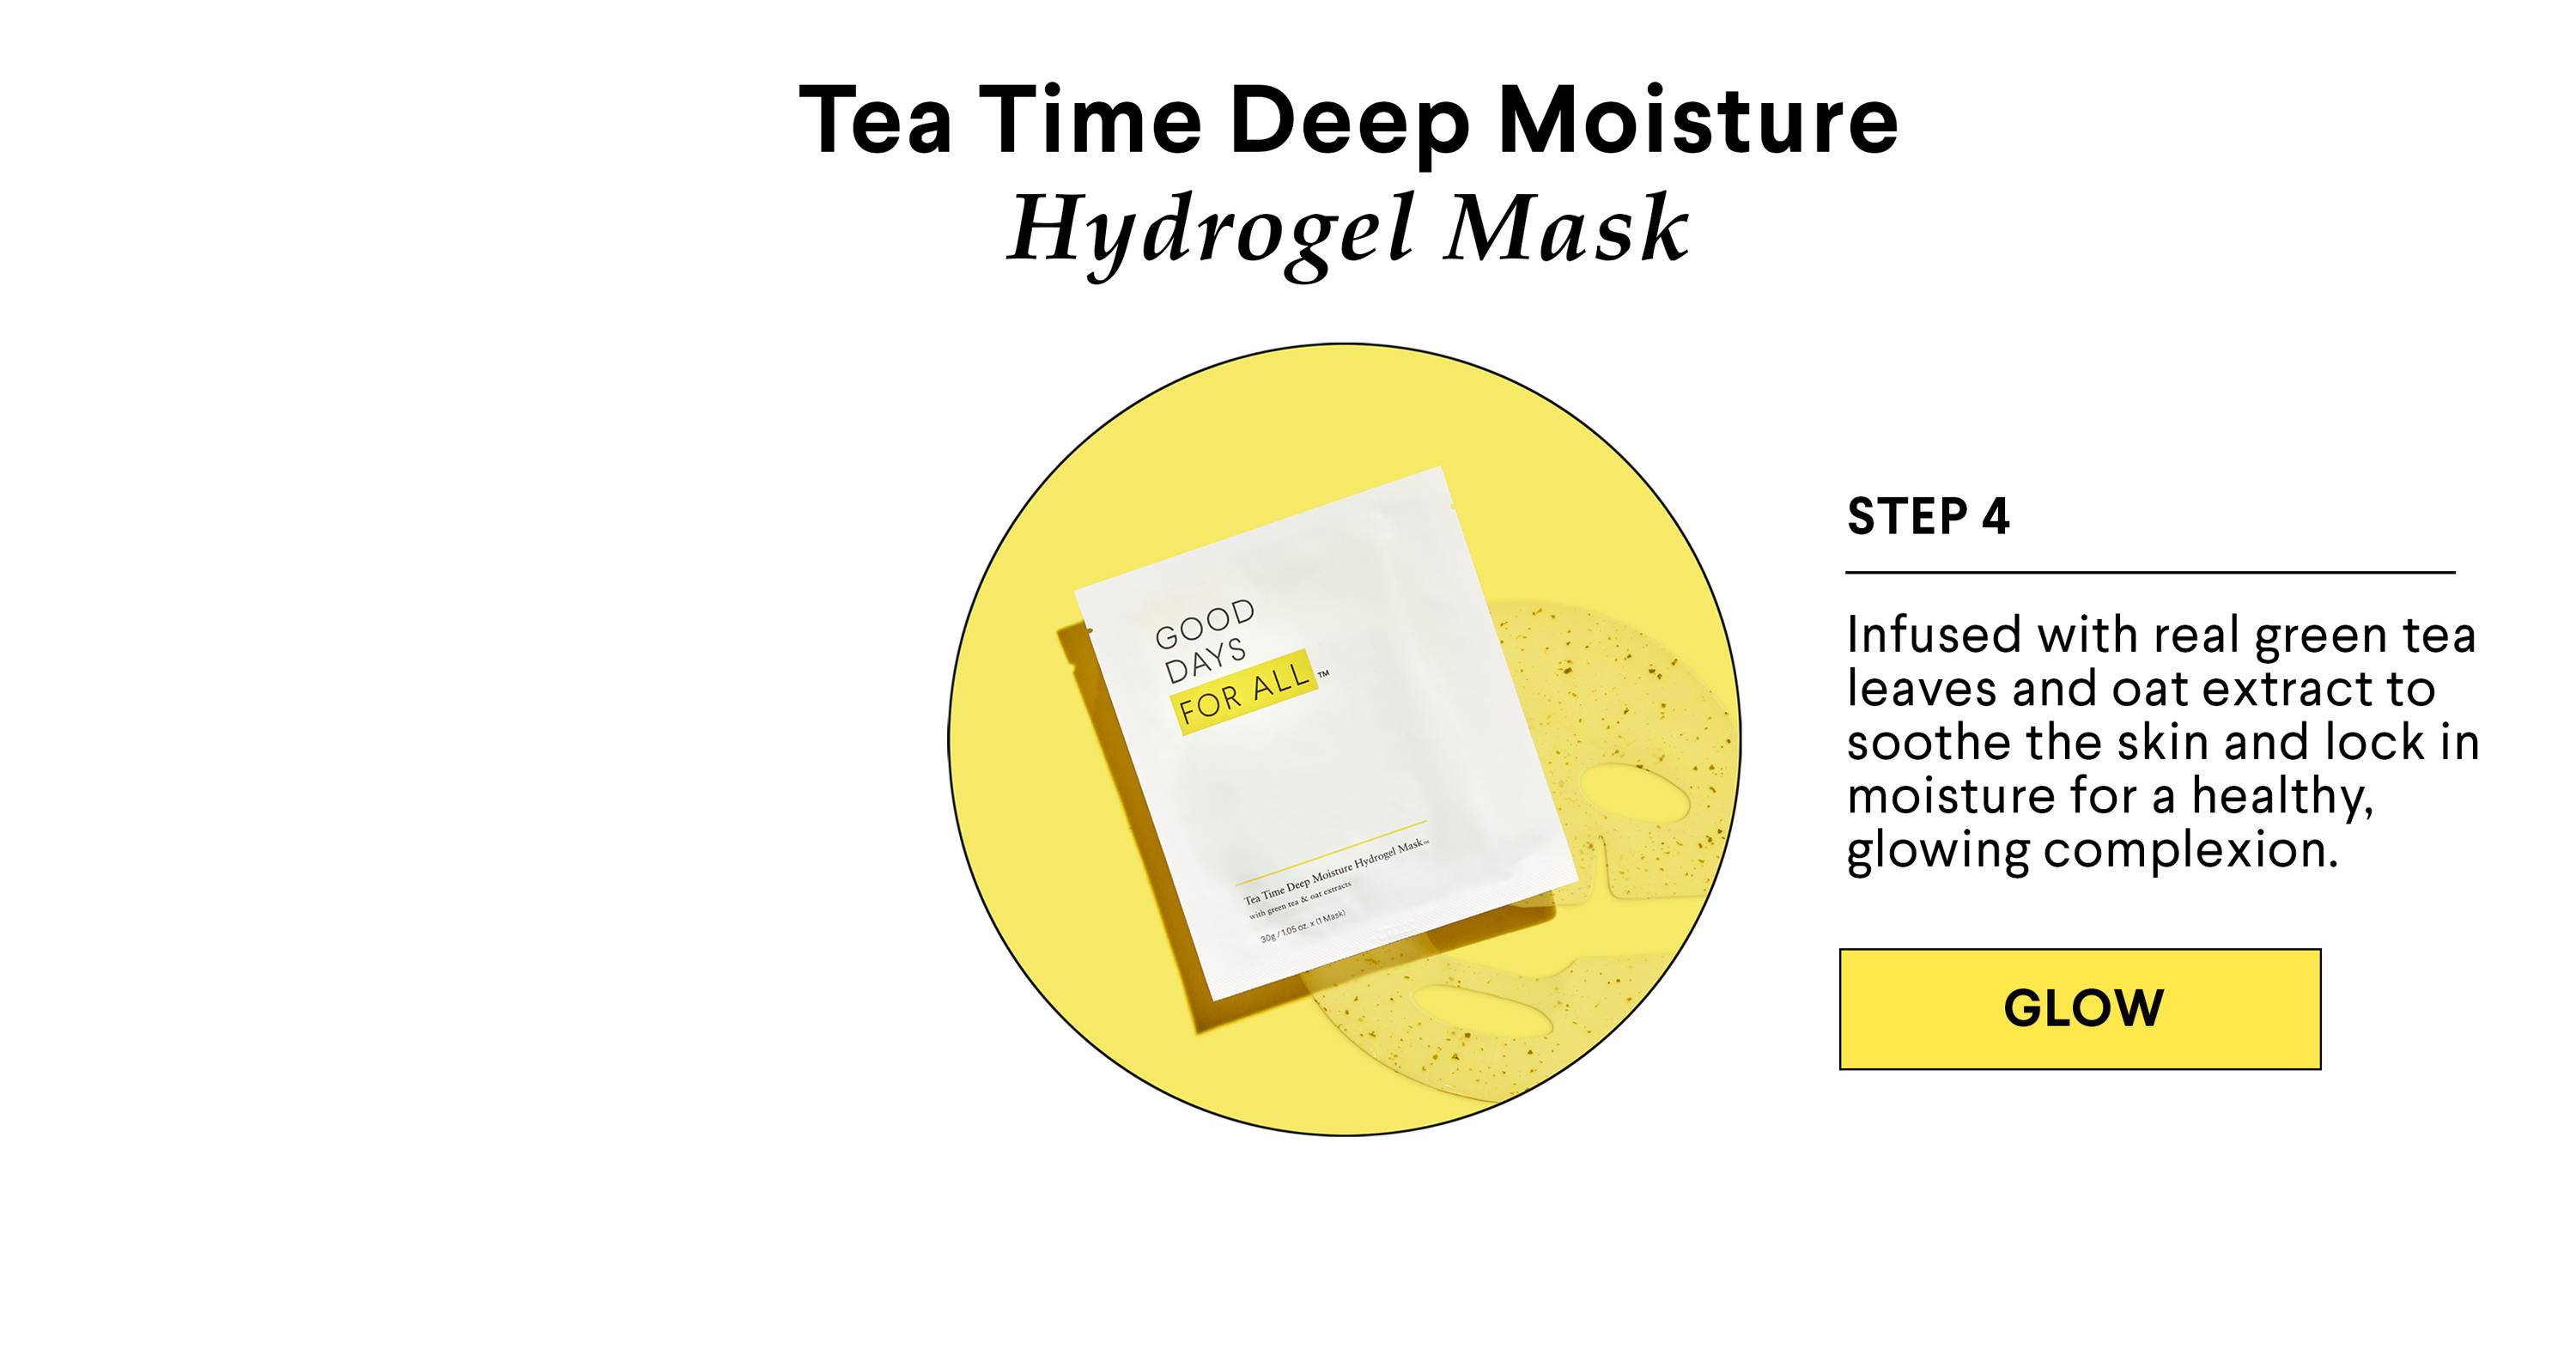 Tea Time Deep Moisture Hydrogel Mask